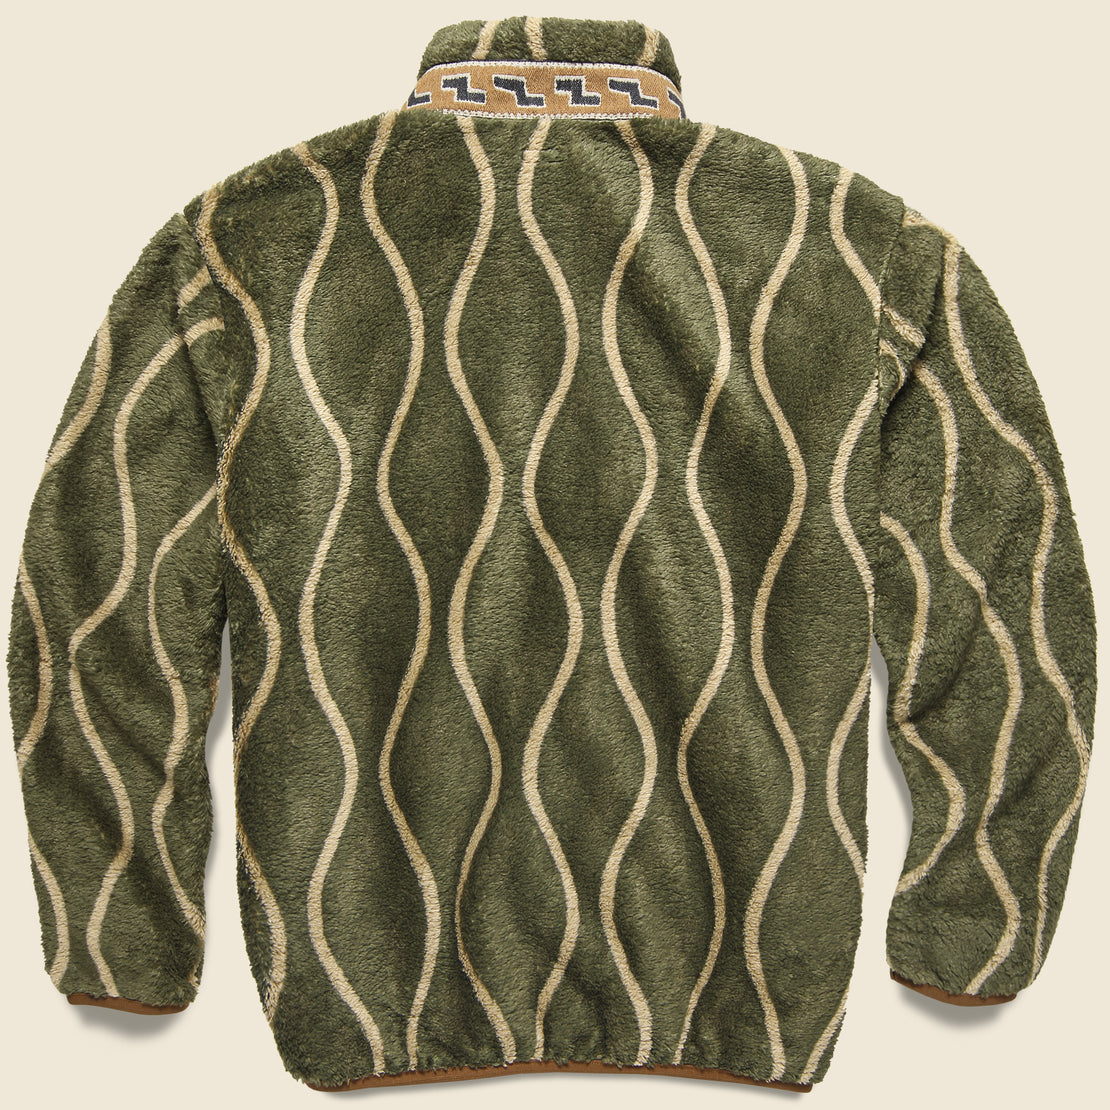 DRUNK STRIPE Fleece Zip Blouson - Khaki - Kapital - STAG Provisions - Outerwear - Coat / Jacket